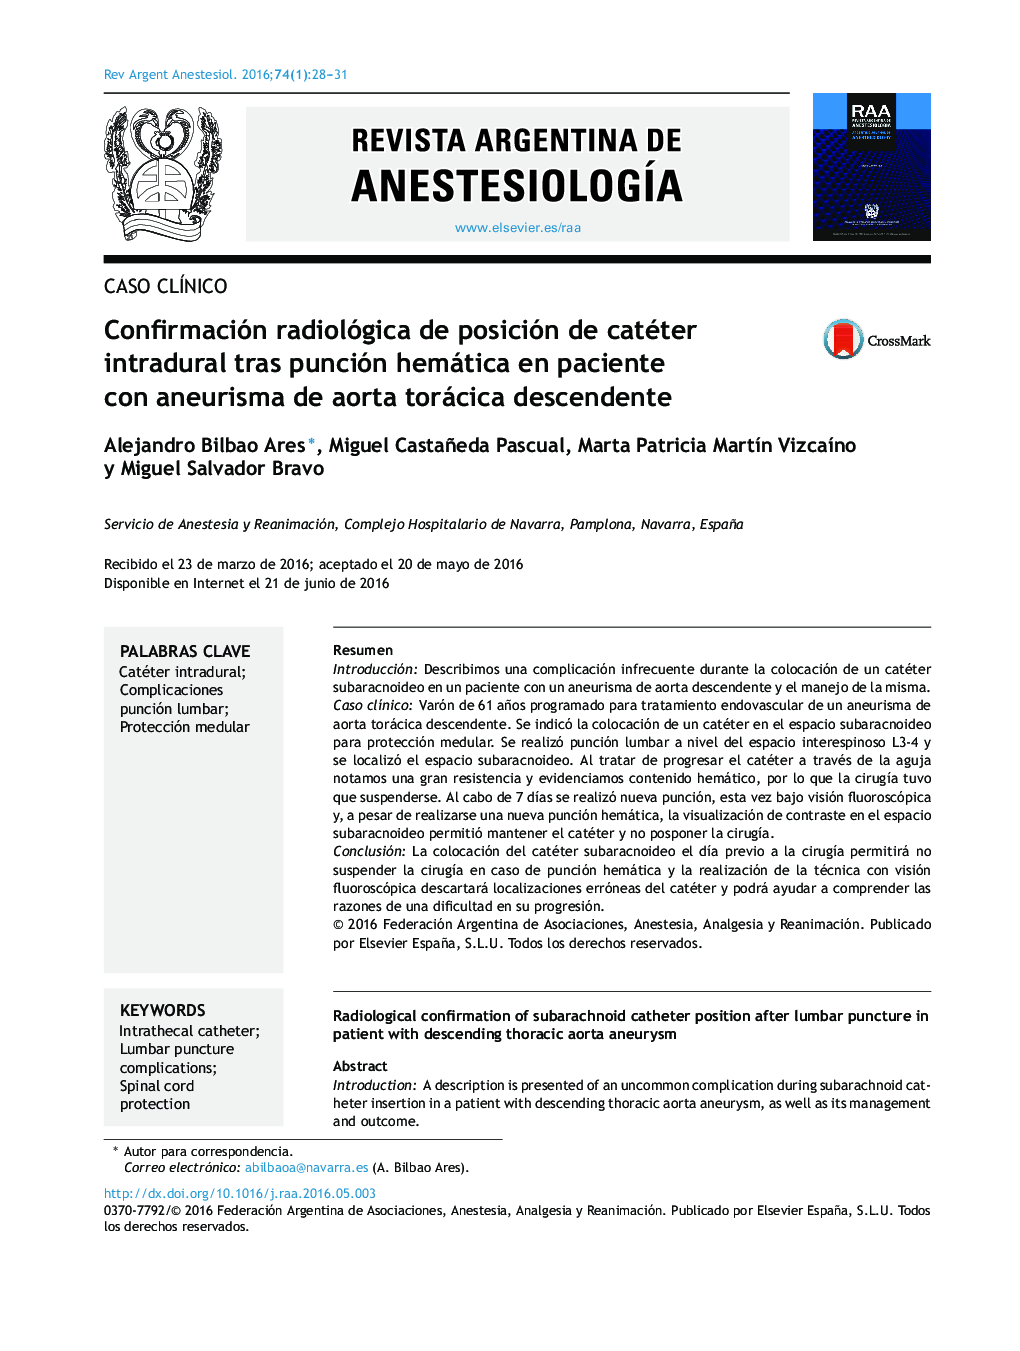 Confirmación radiológica de posición de catéter intradural tras punción hemática en paciente con aneurisma de aorta torácica descendente